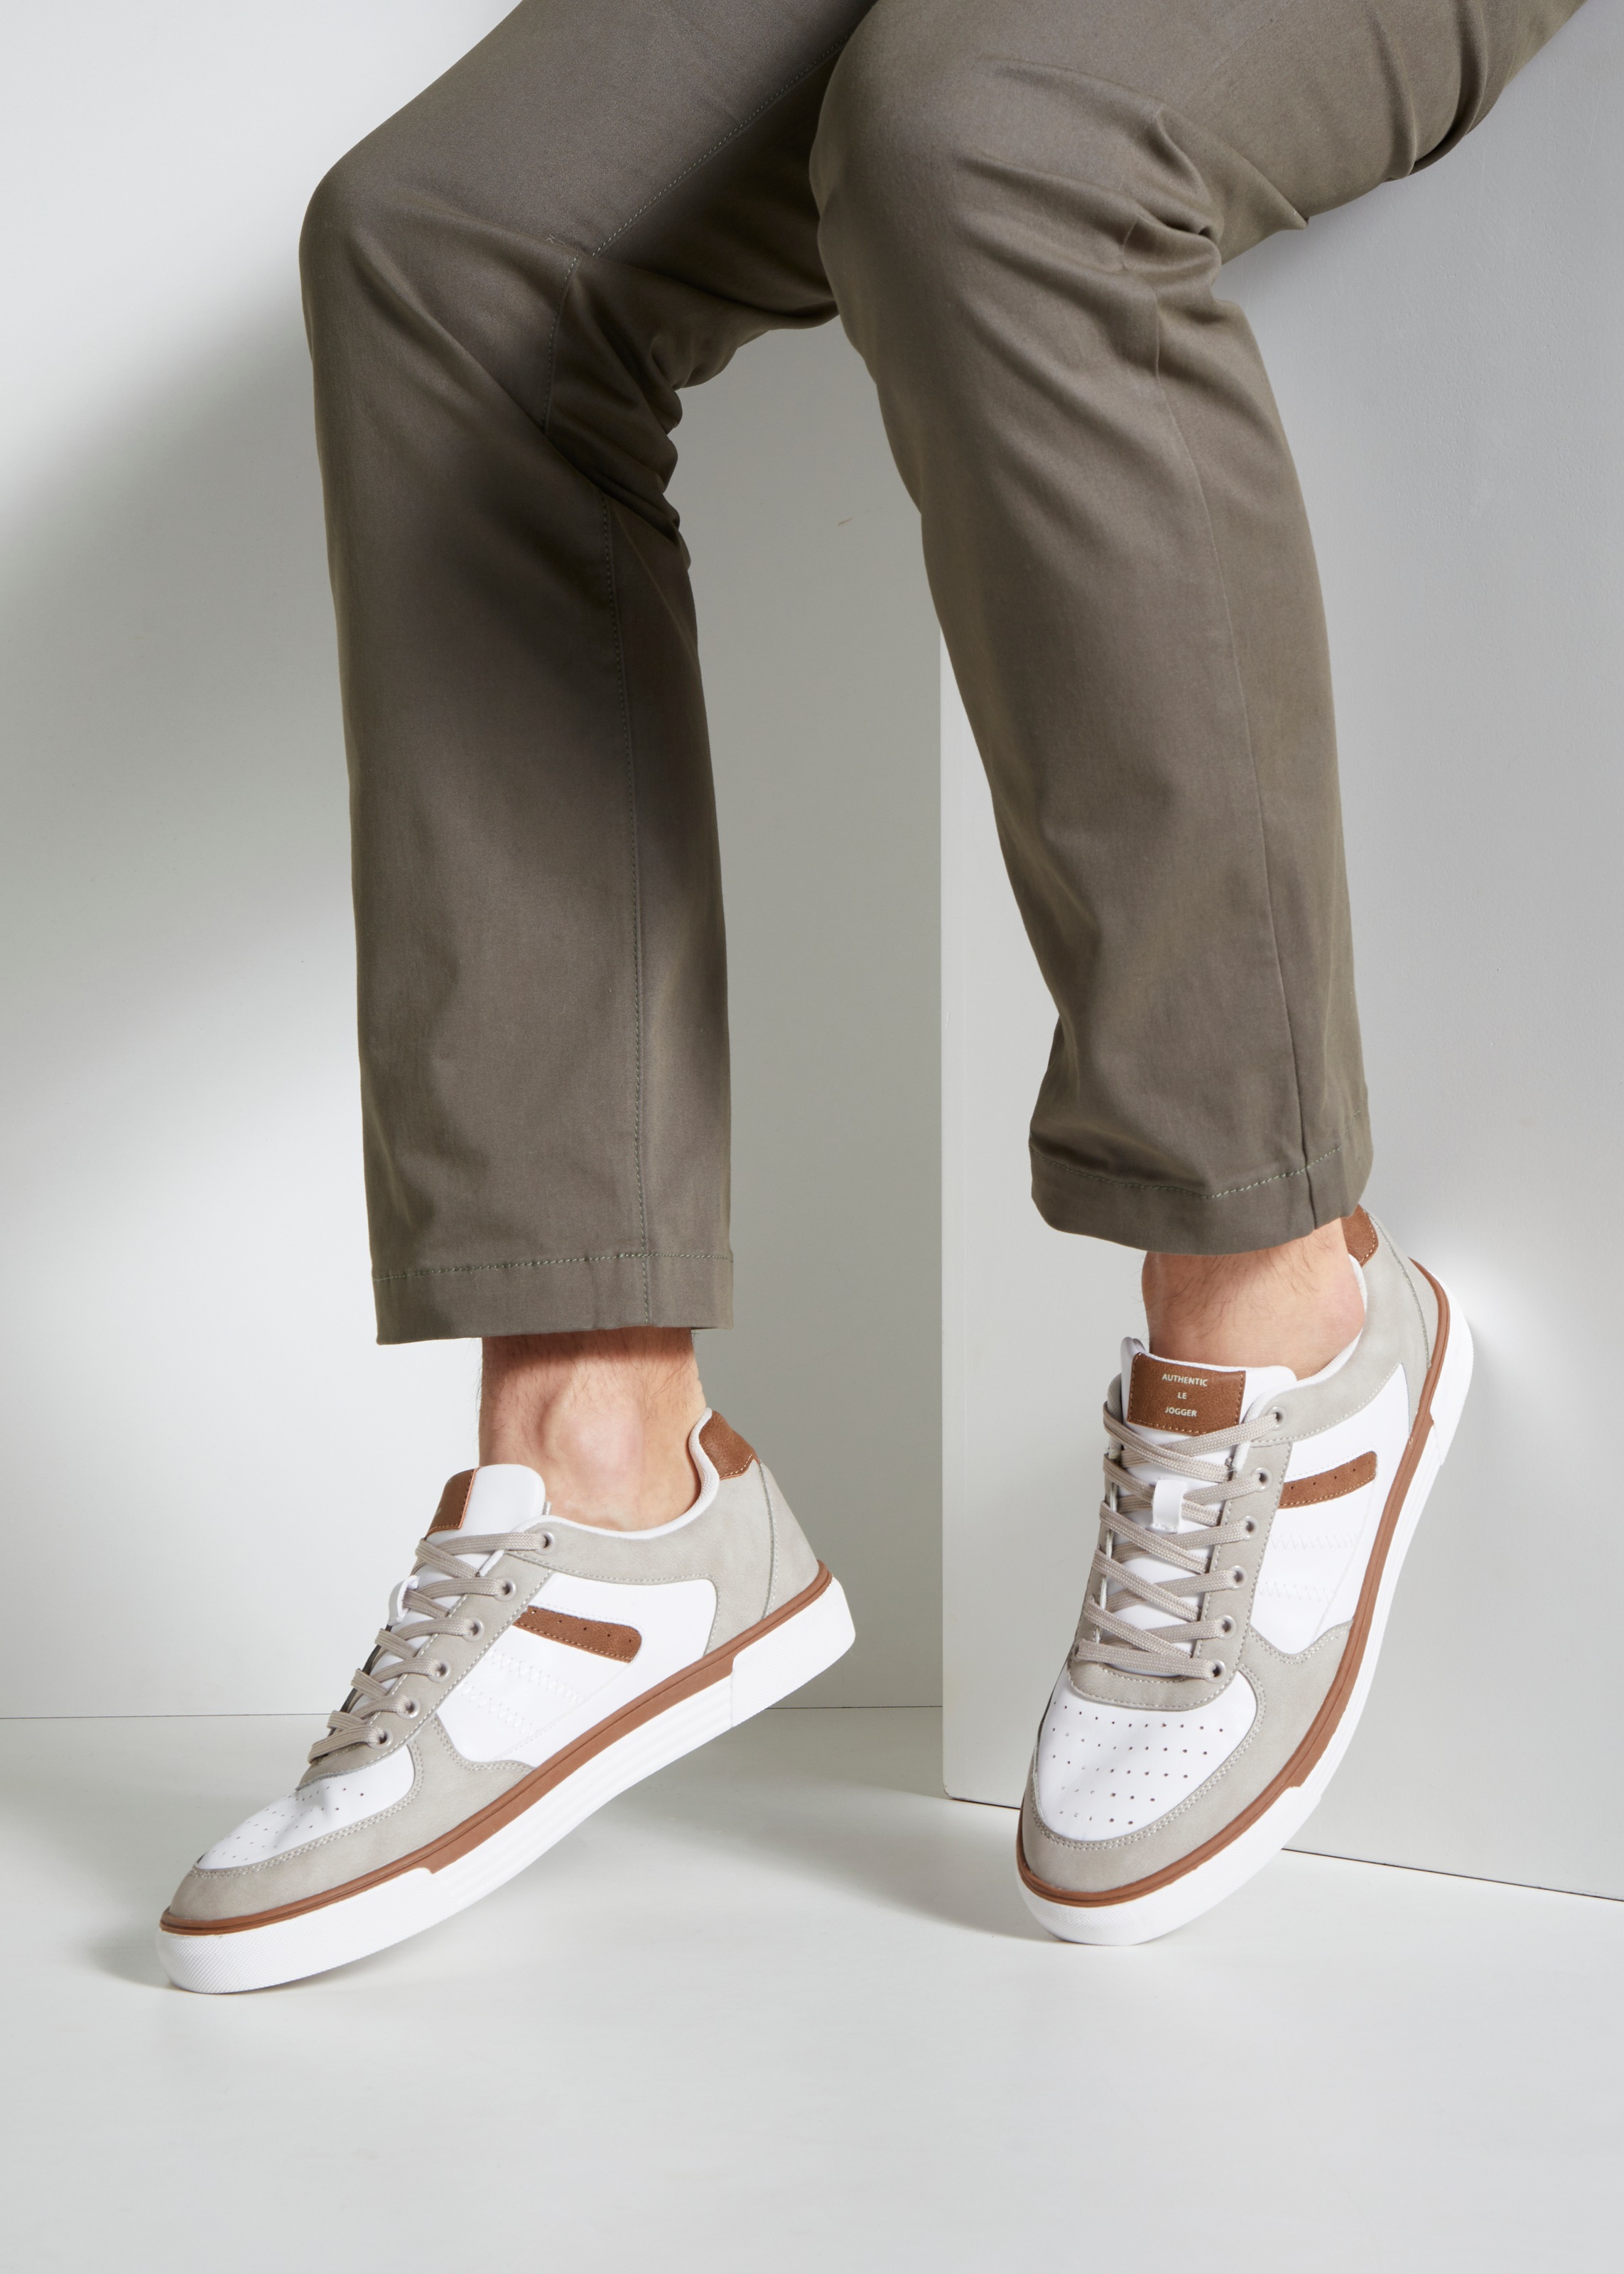 AUTHENTIC LE JOGGER Sneaker, mit Farb- & Materialmix, Schnürhalbschuhe, Freizeitschuhe, VEGAN